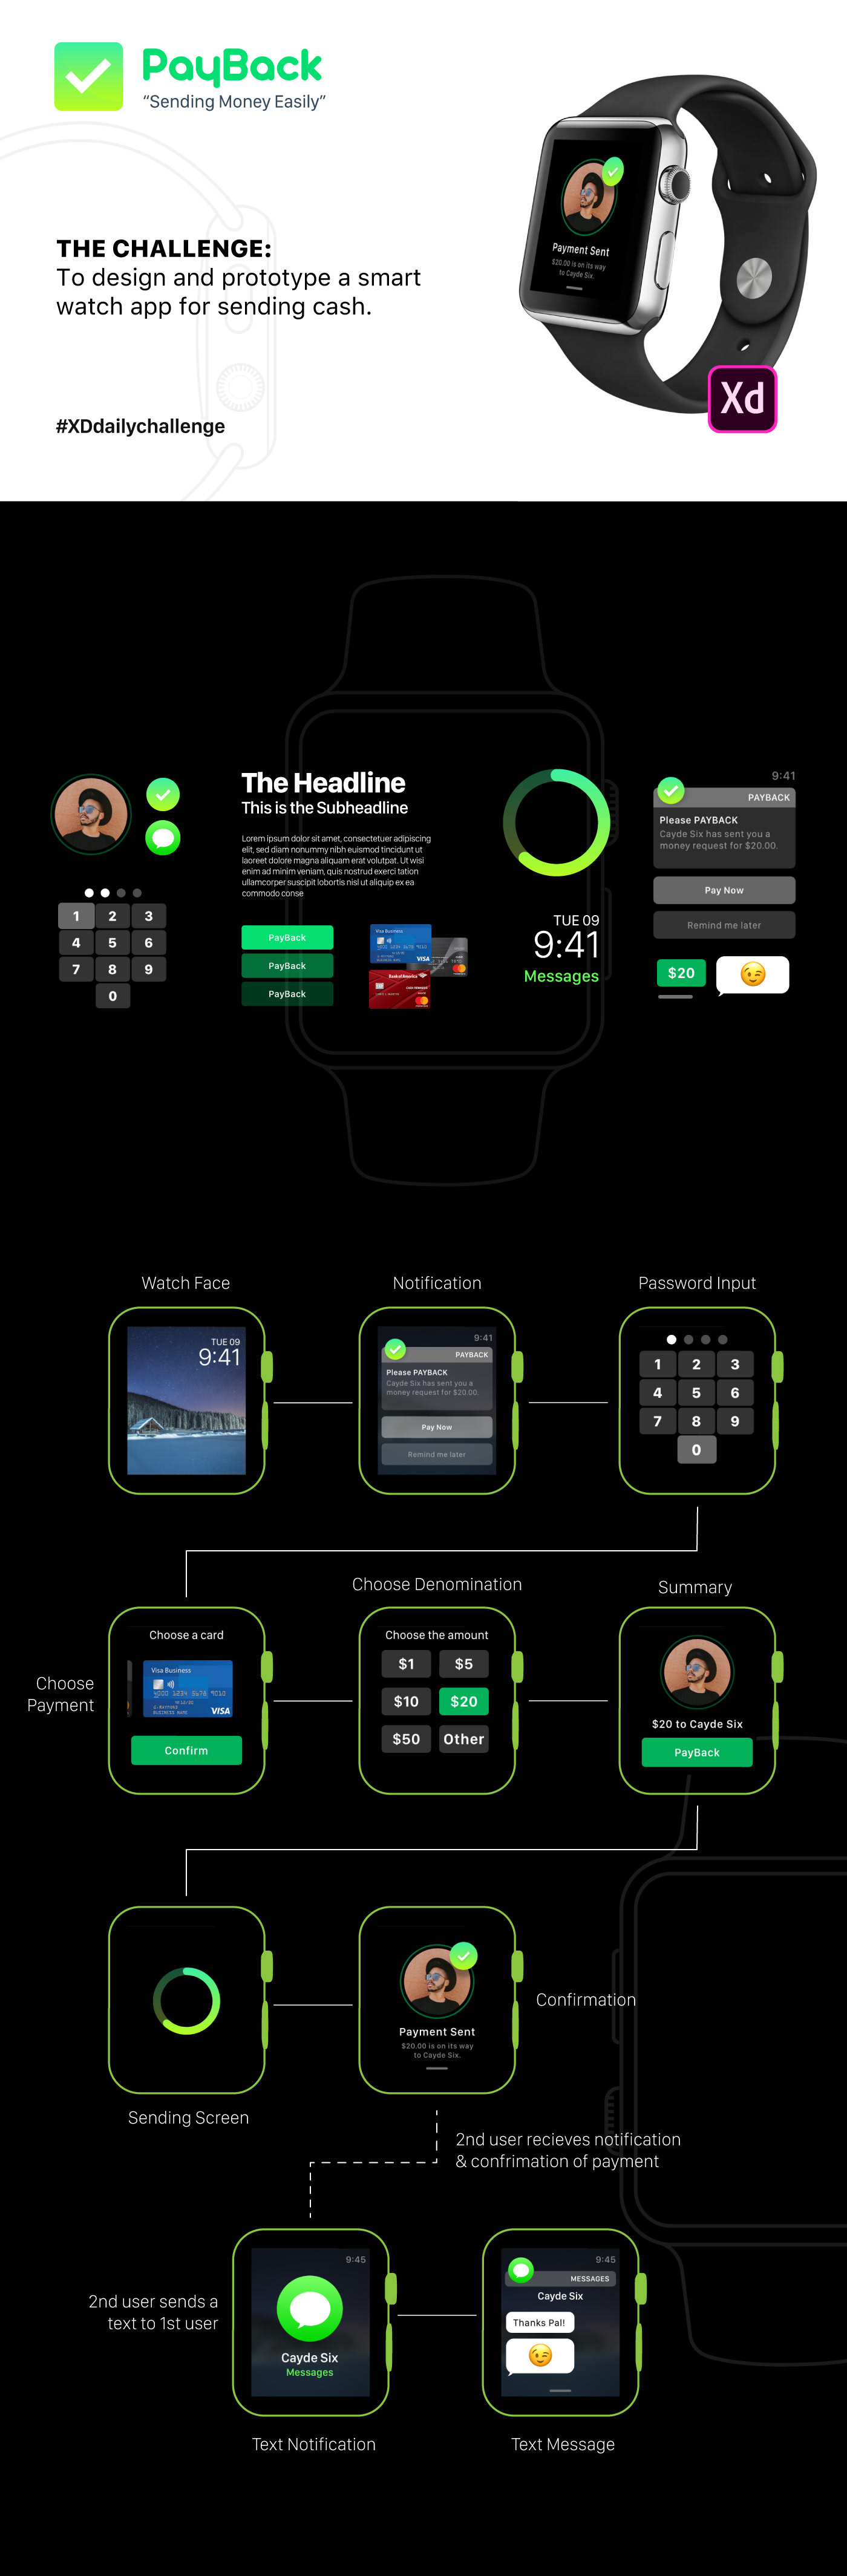 User Experience Design UX design ui design user interface design ux/ui App Design Concept smart watch app apple watch Prototyping xddailychallenge